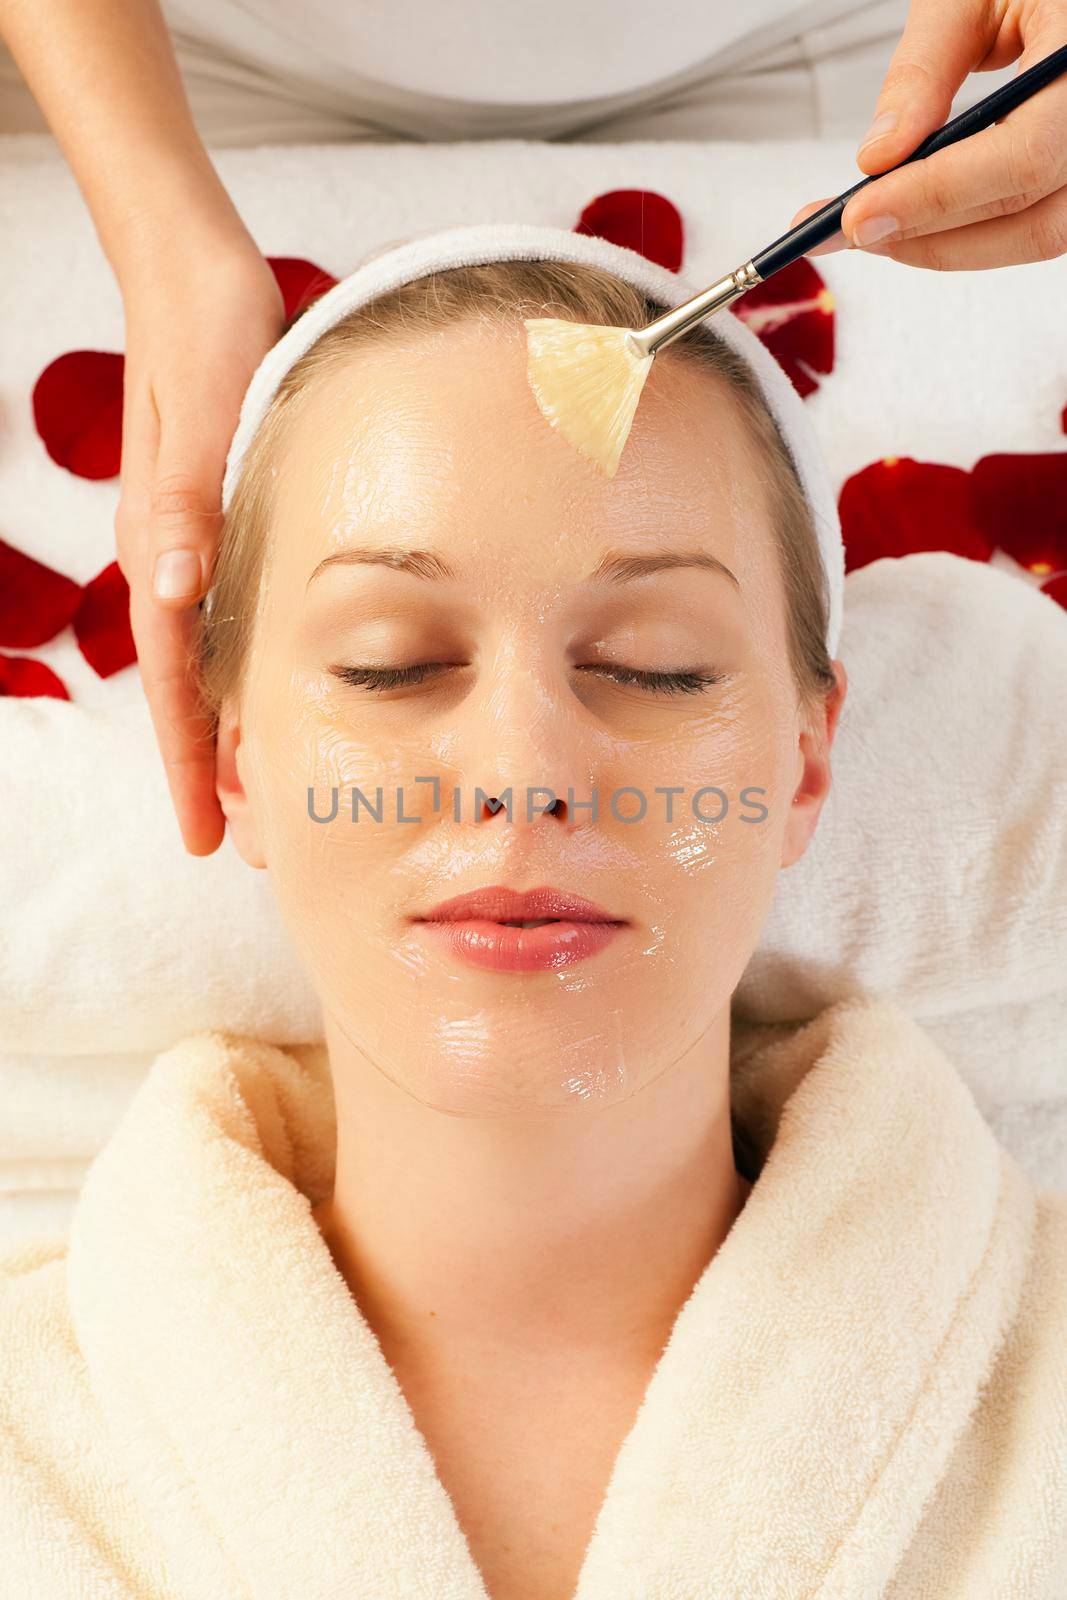 Cosmetics - applying facial mask by Kzenon